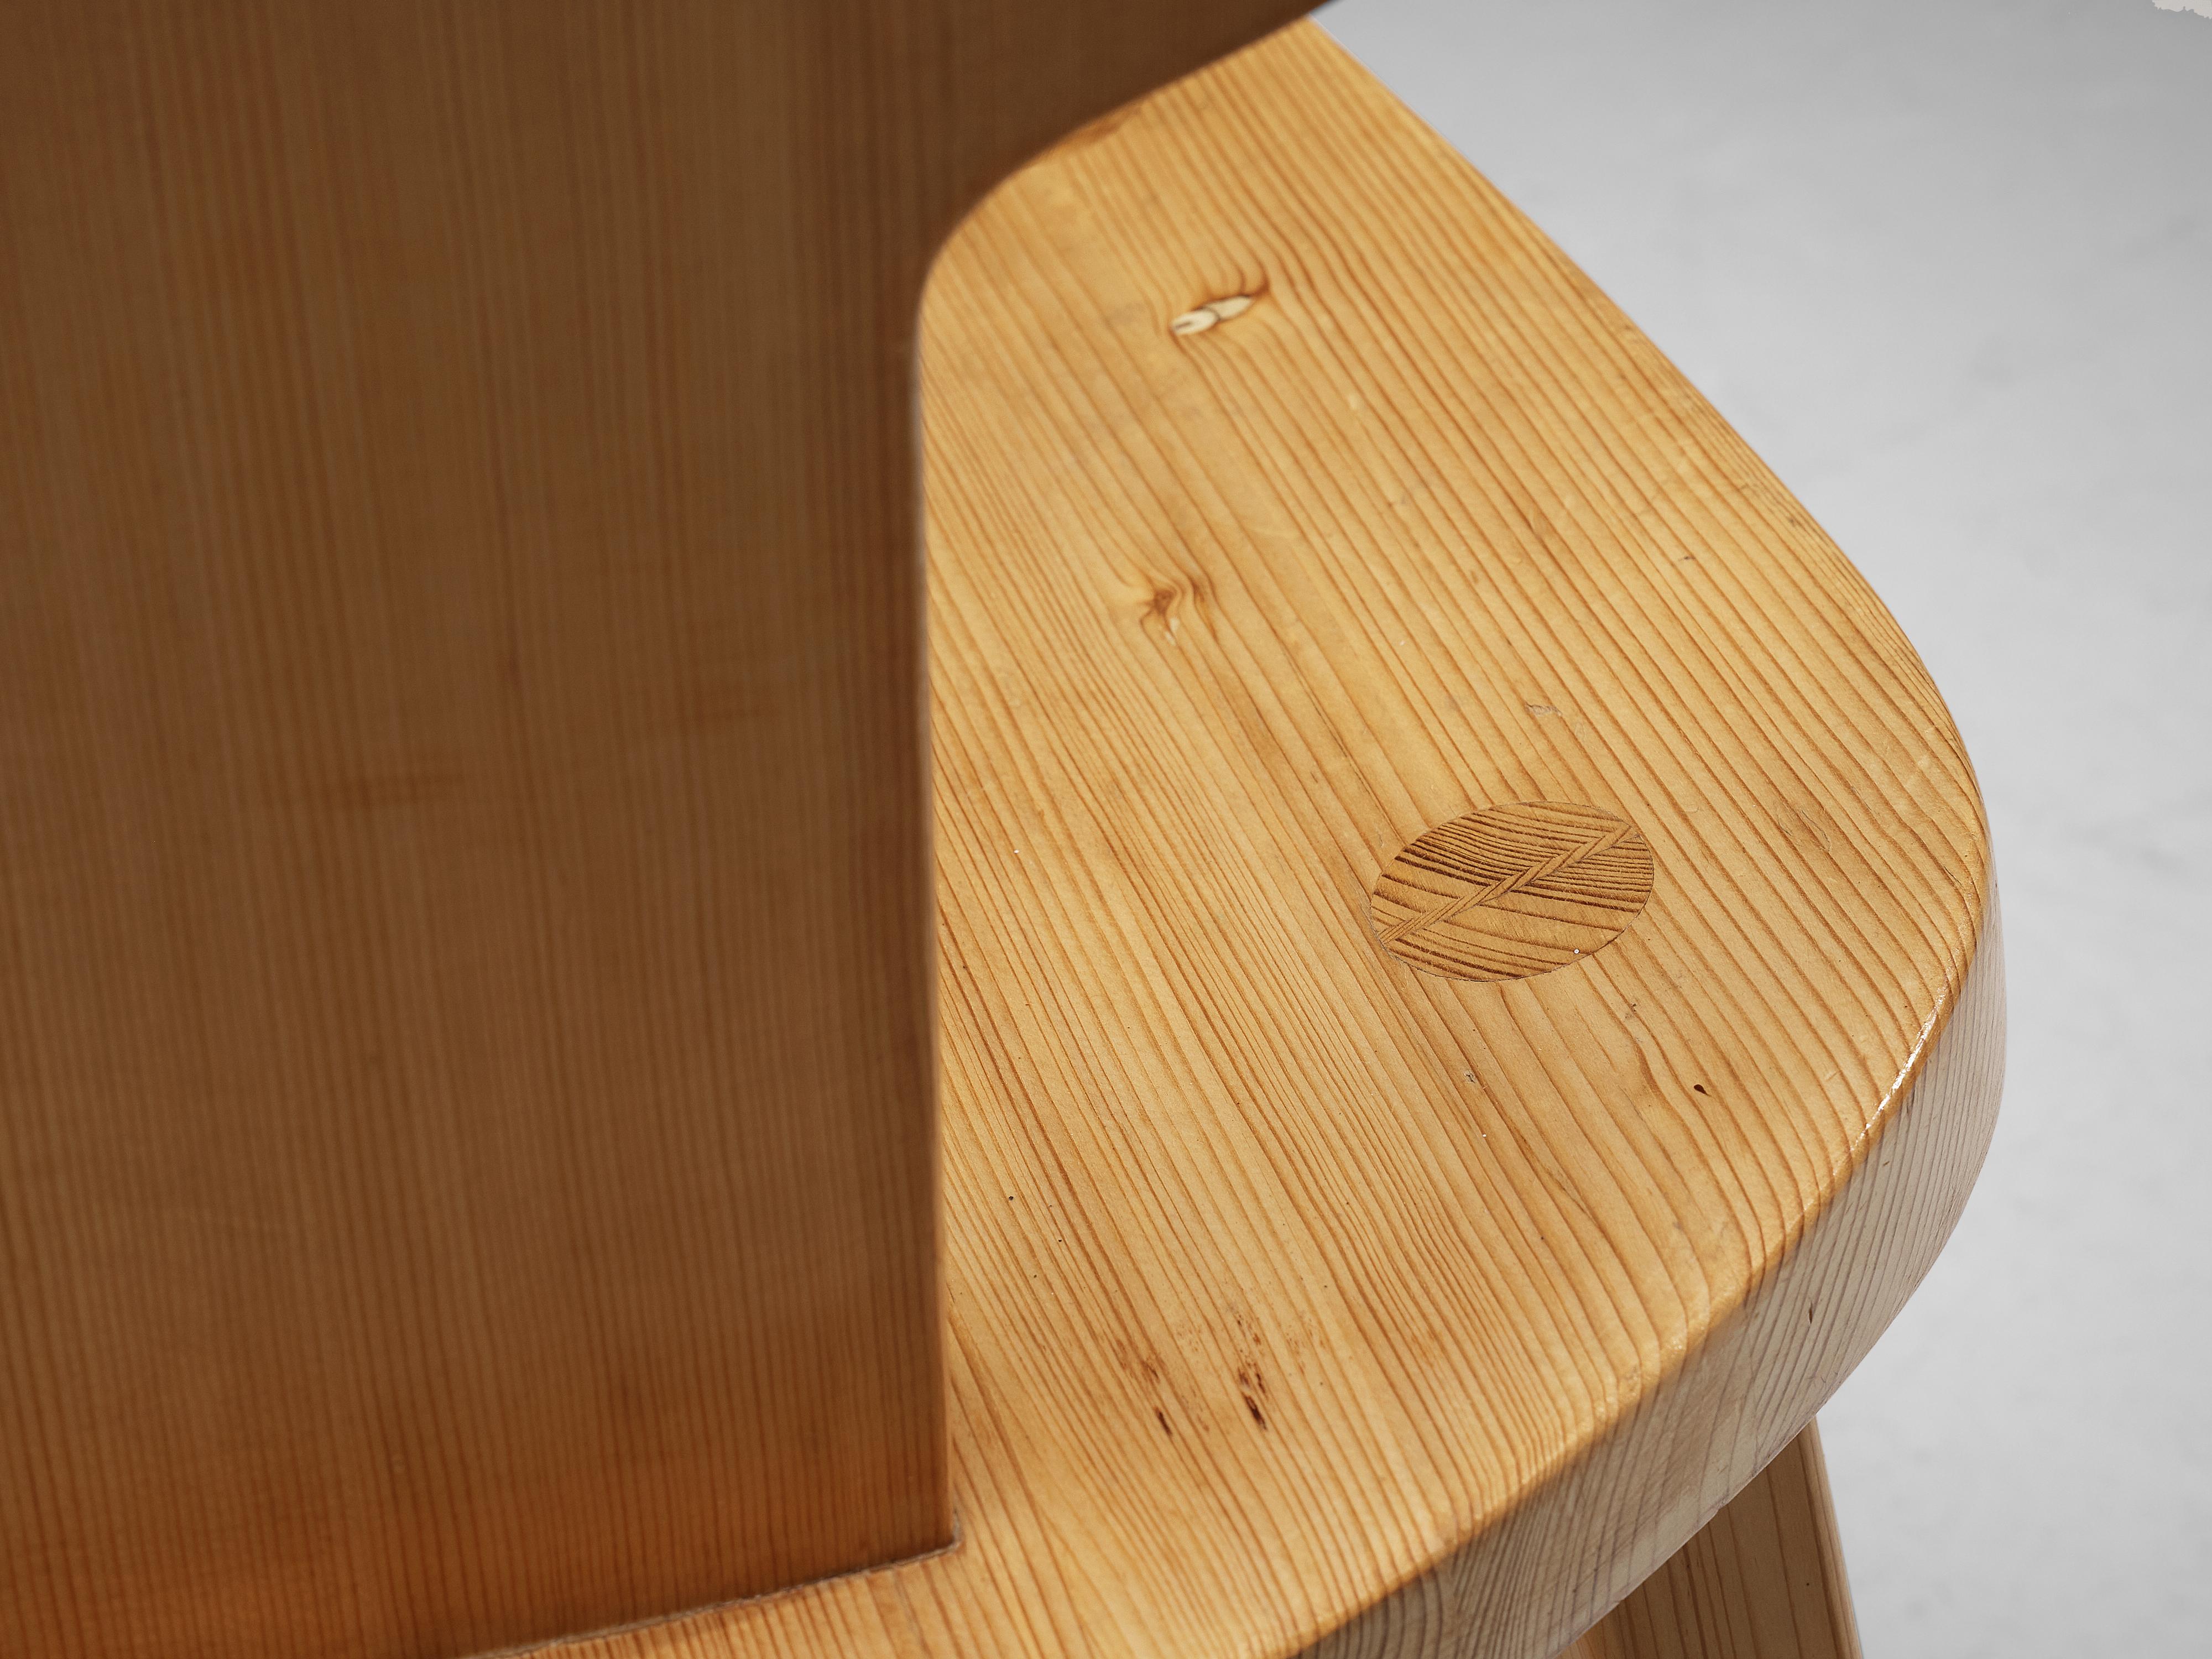 Jacob Kielland-Brandt Sculptural Chair in Solid Pine For Sale 3